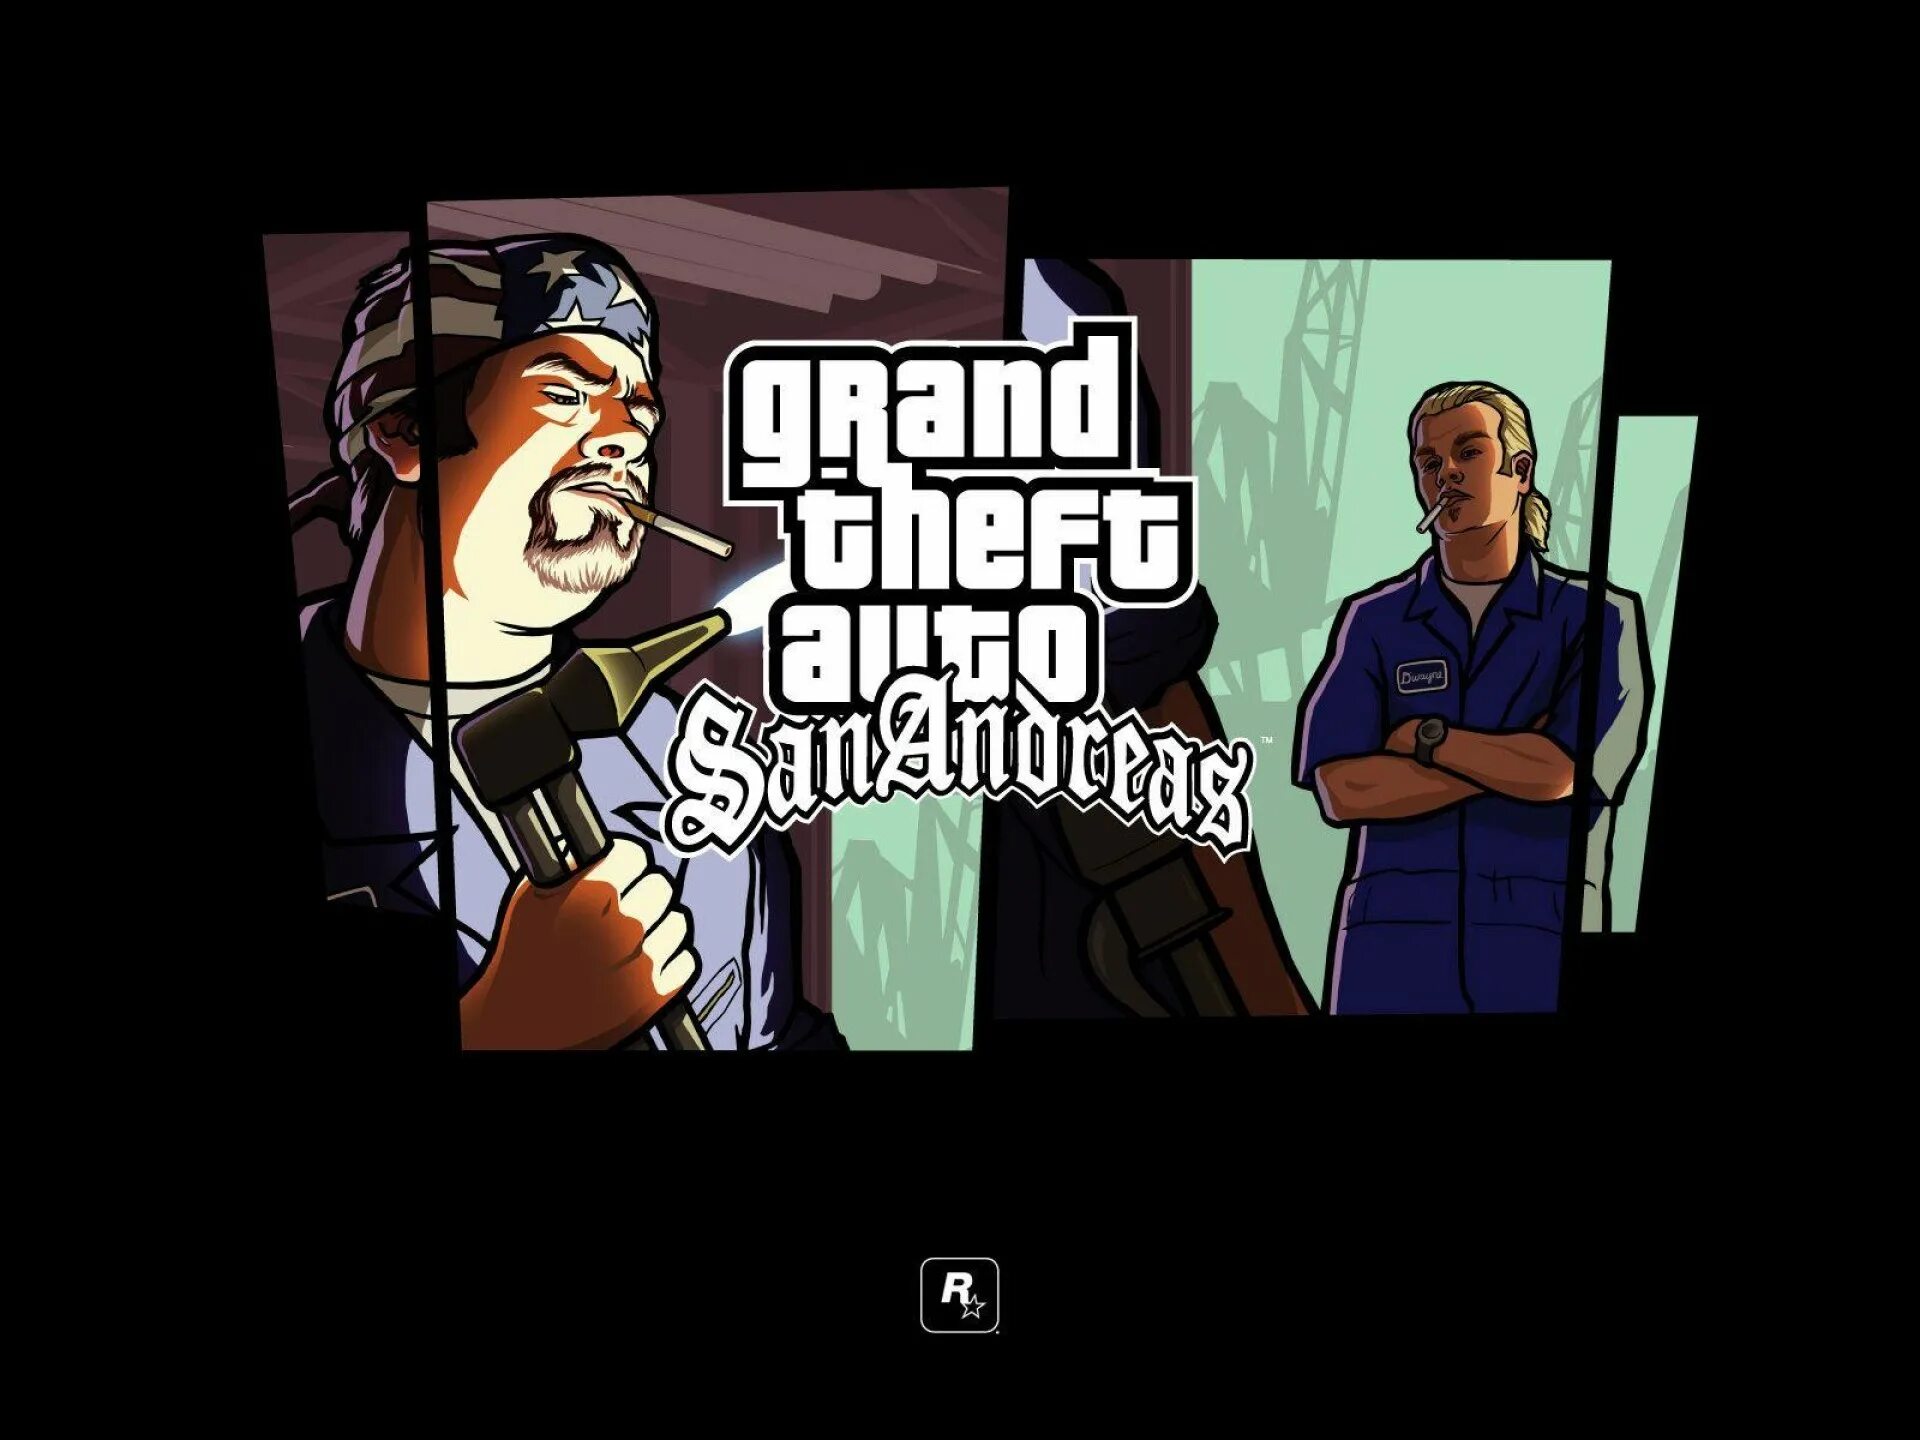 Gta loading theme. Grand Theft auto: San Andreas. Рисунки ГТА Сан андреас. Обои ГТА Сан андреас. Заставка ГТА са.